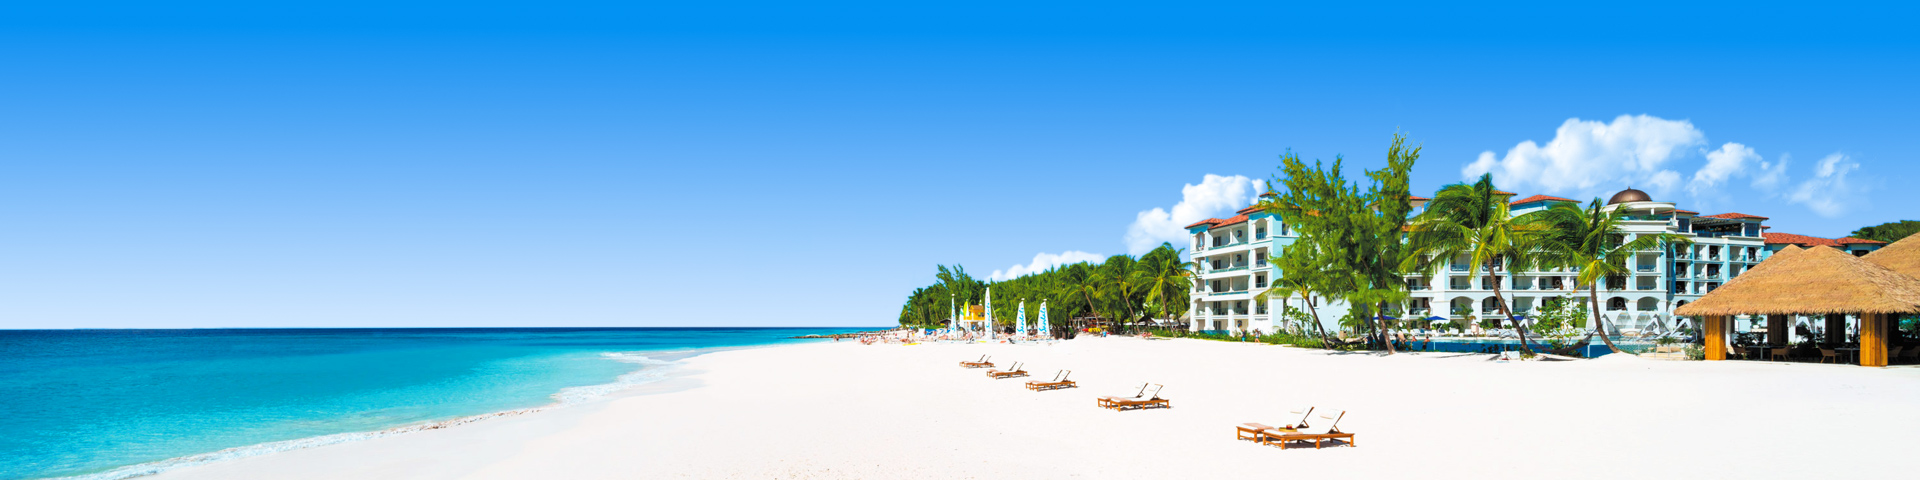 Parelwit strand op Barbados